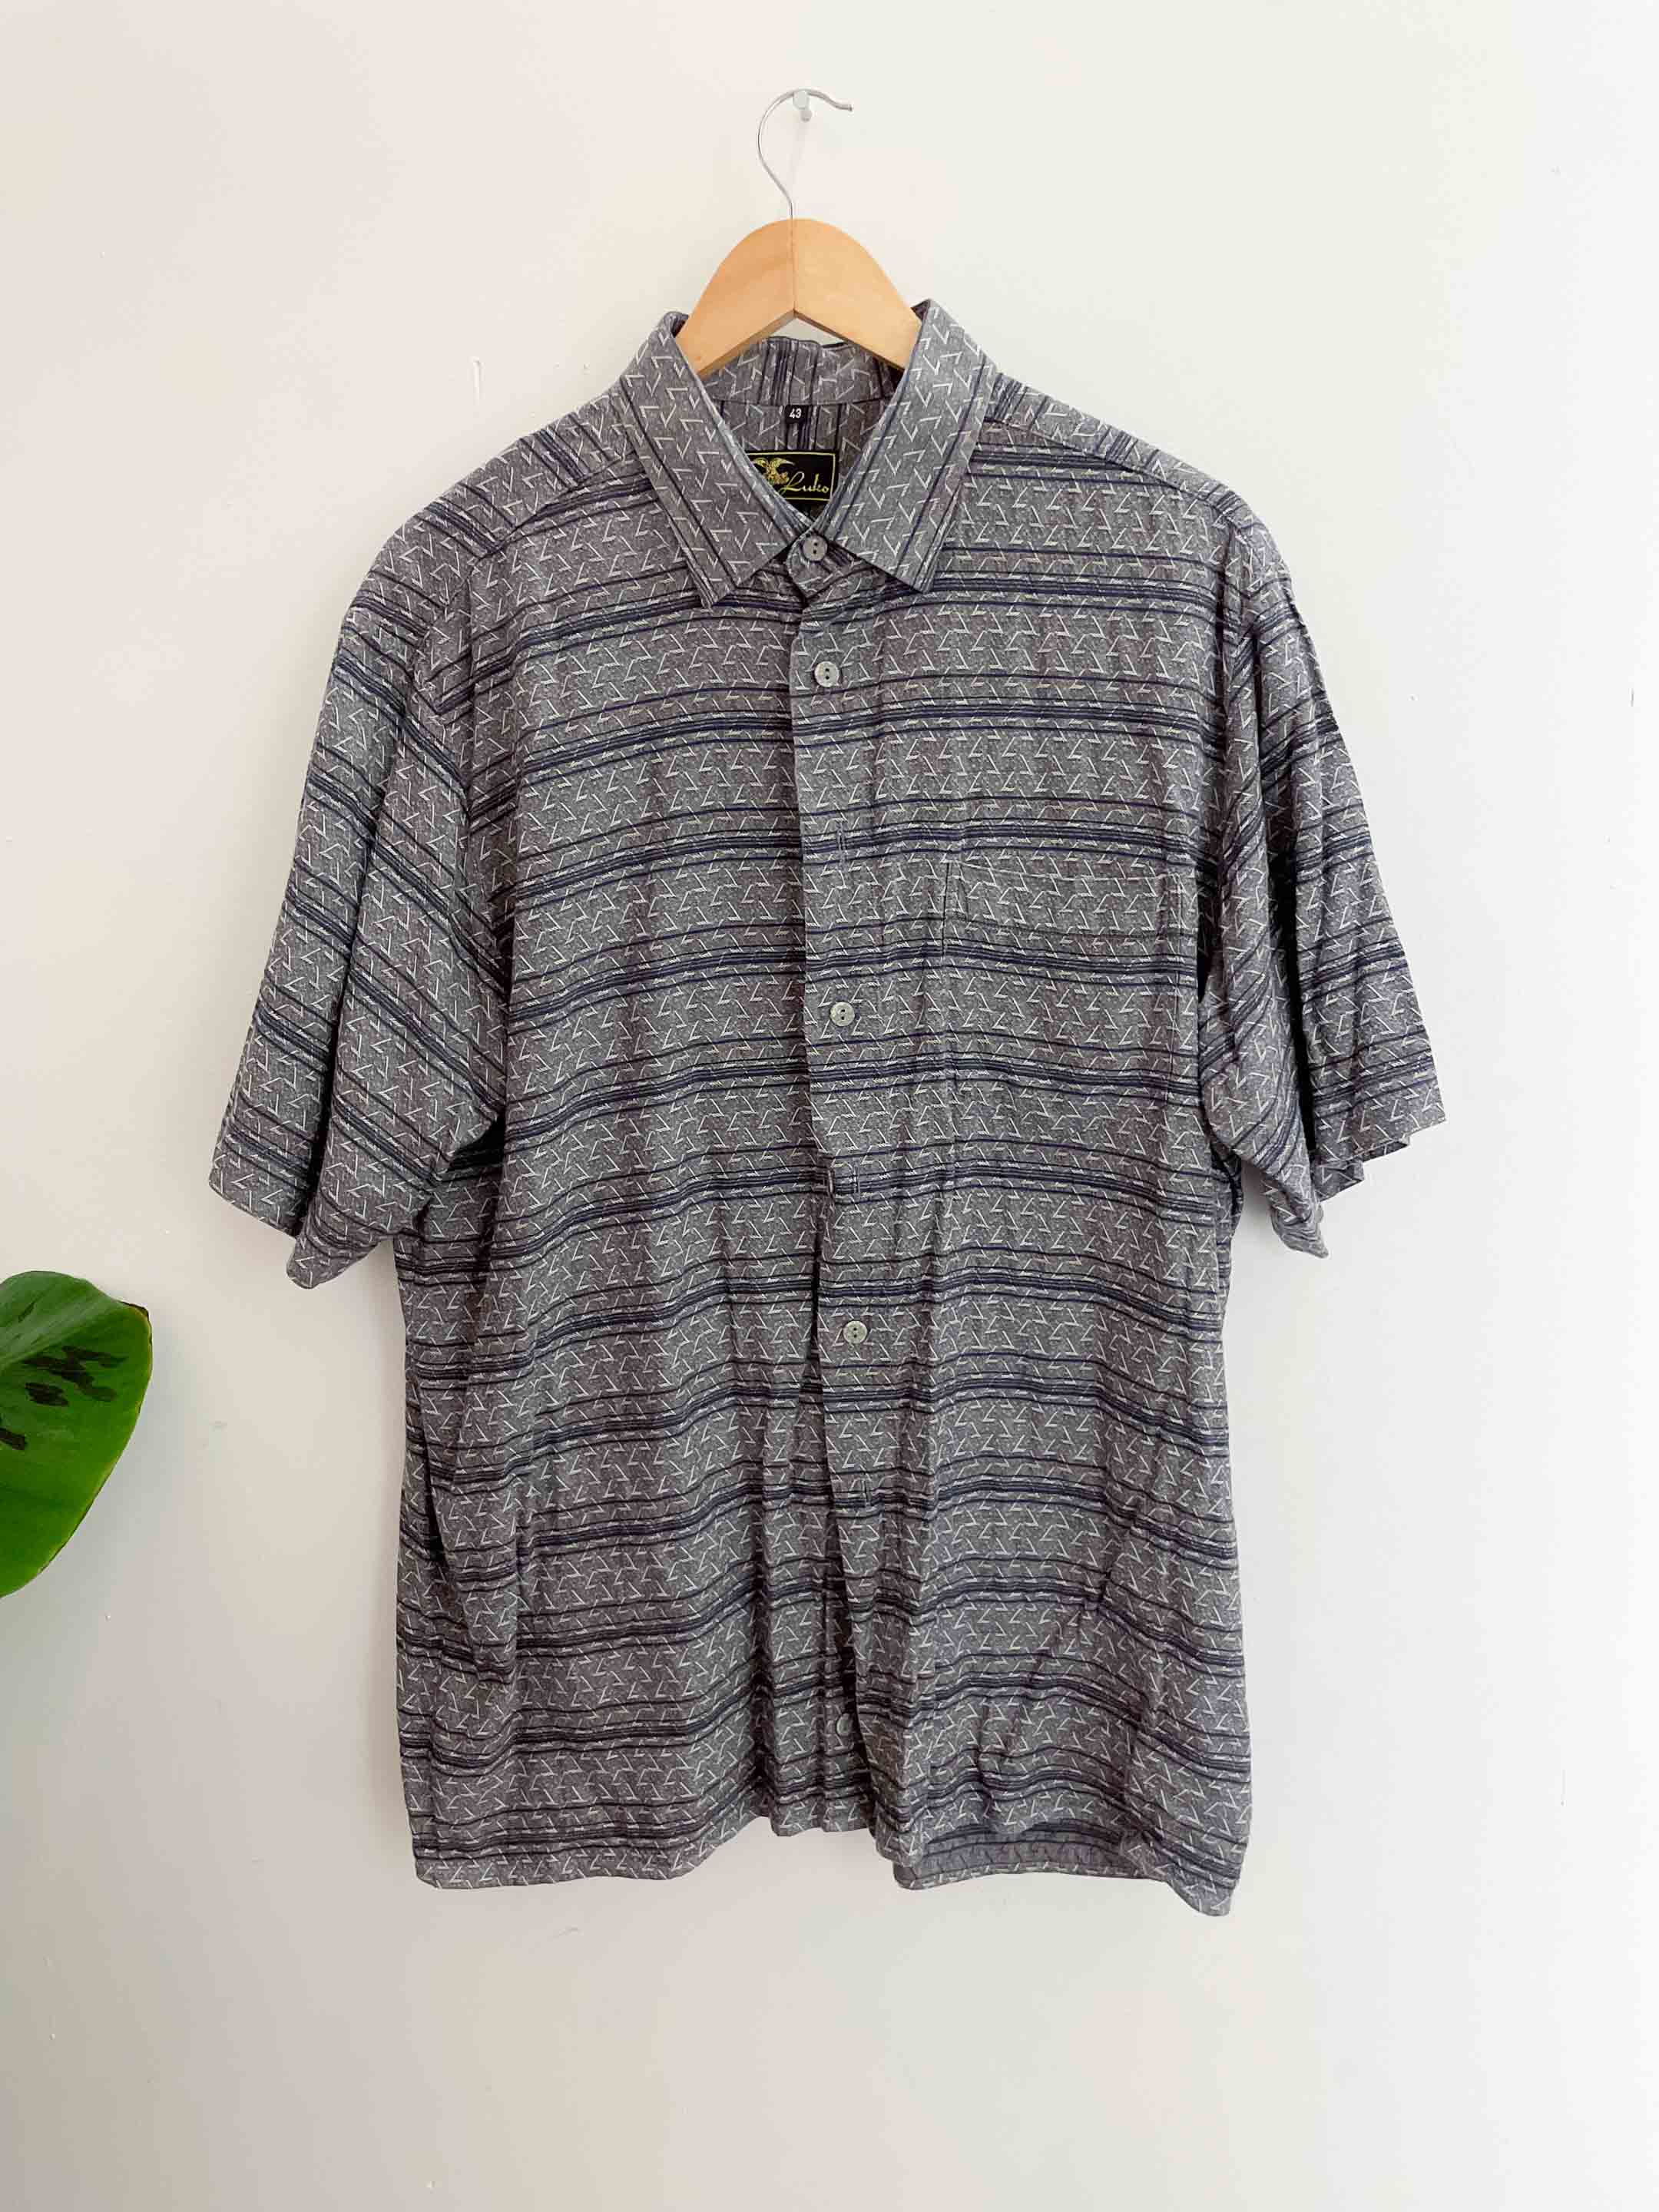 Vintage luko sustainable men printed short sleeve multi shirt size L